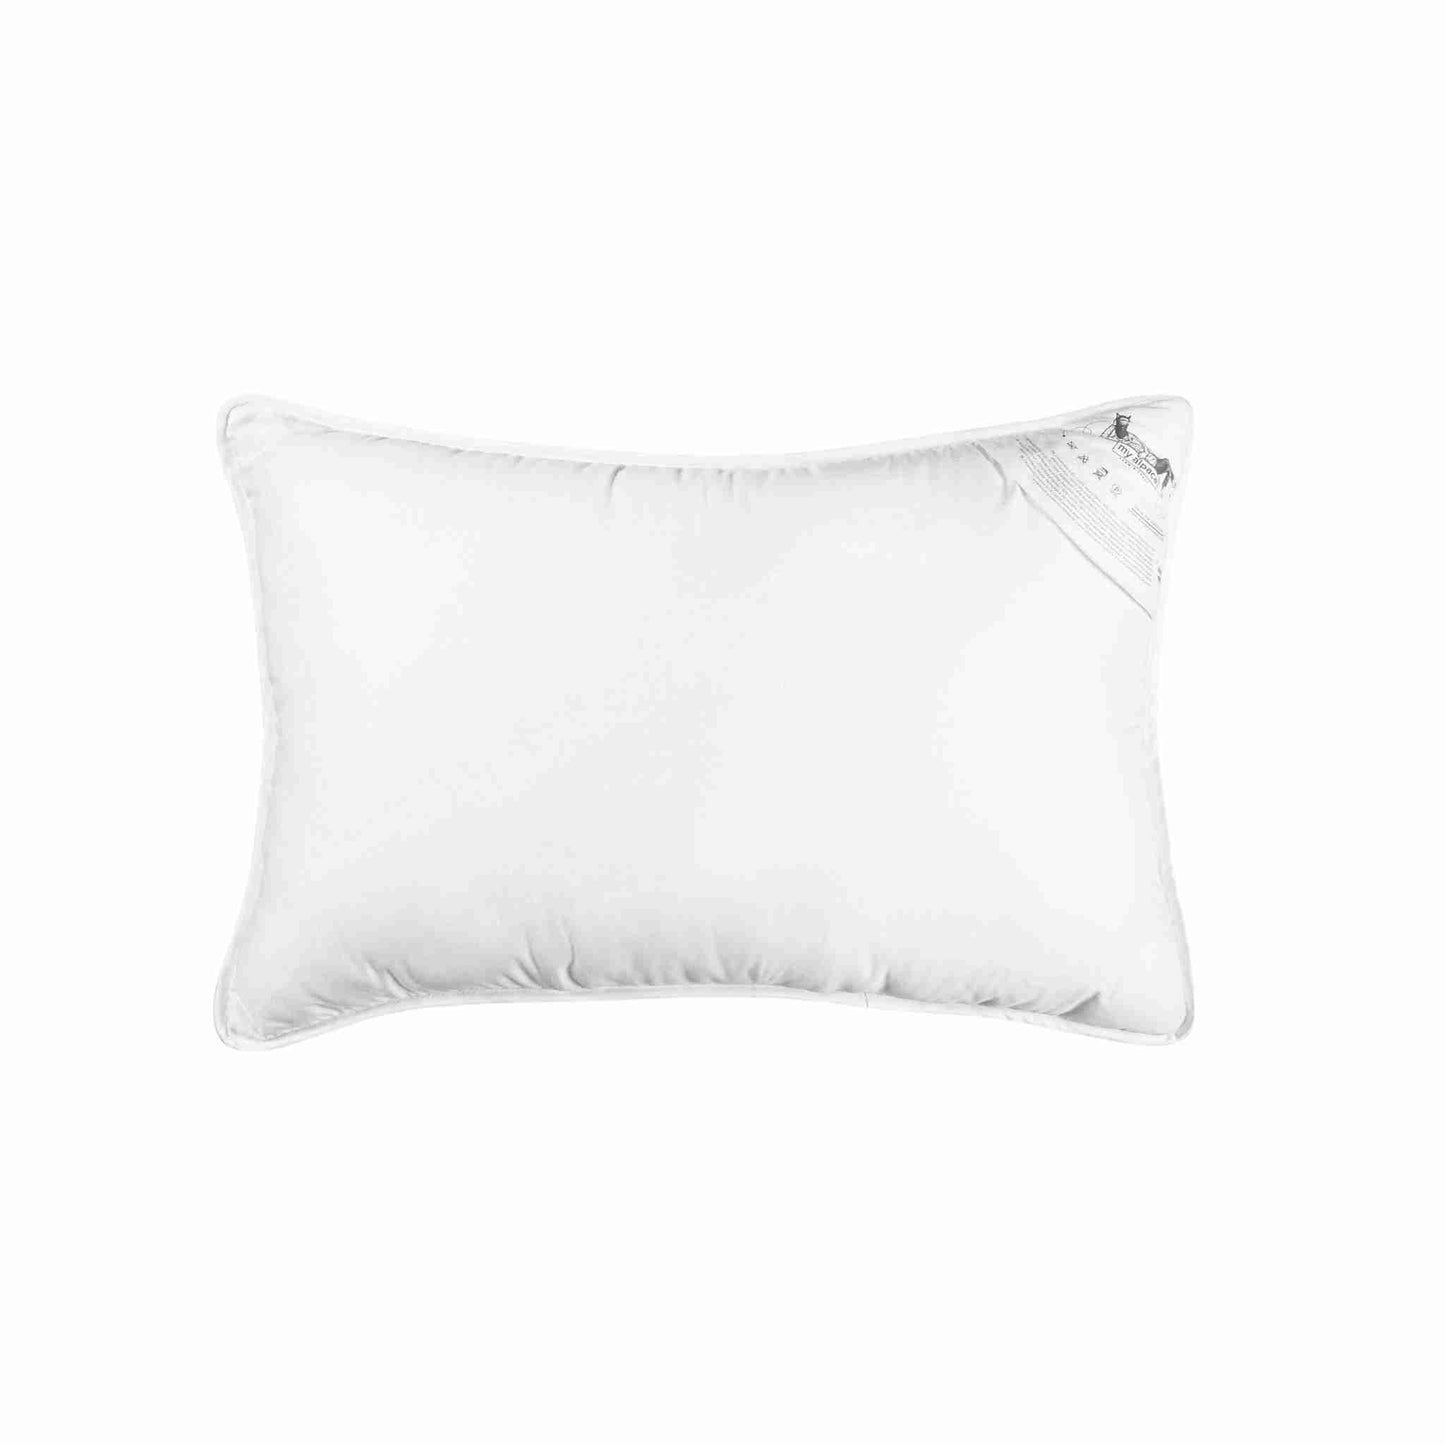 ÉTAUDORÉ MyAlpaca alpaca pillow, filled with 100% alpaca fibre, hypoallergenic & thermoregulatory